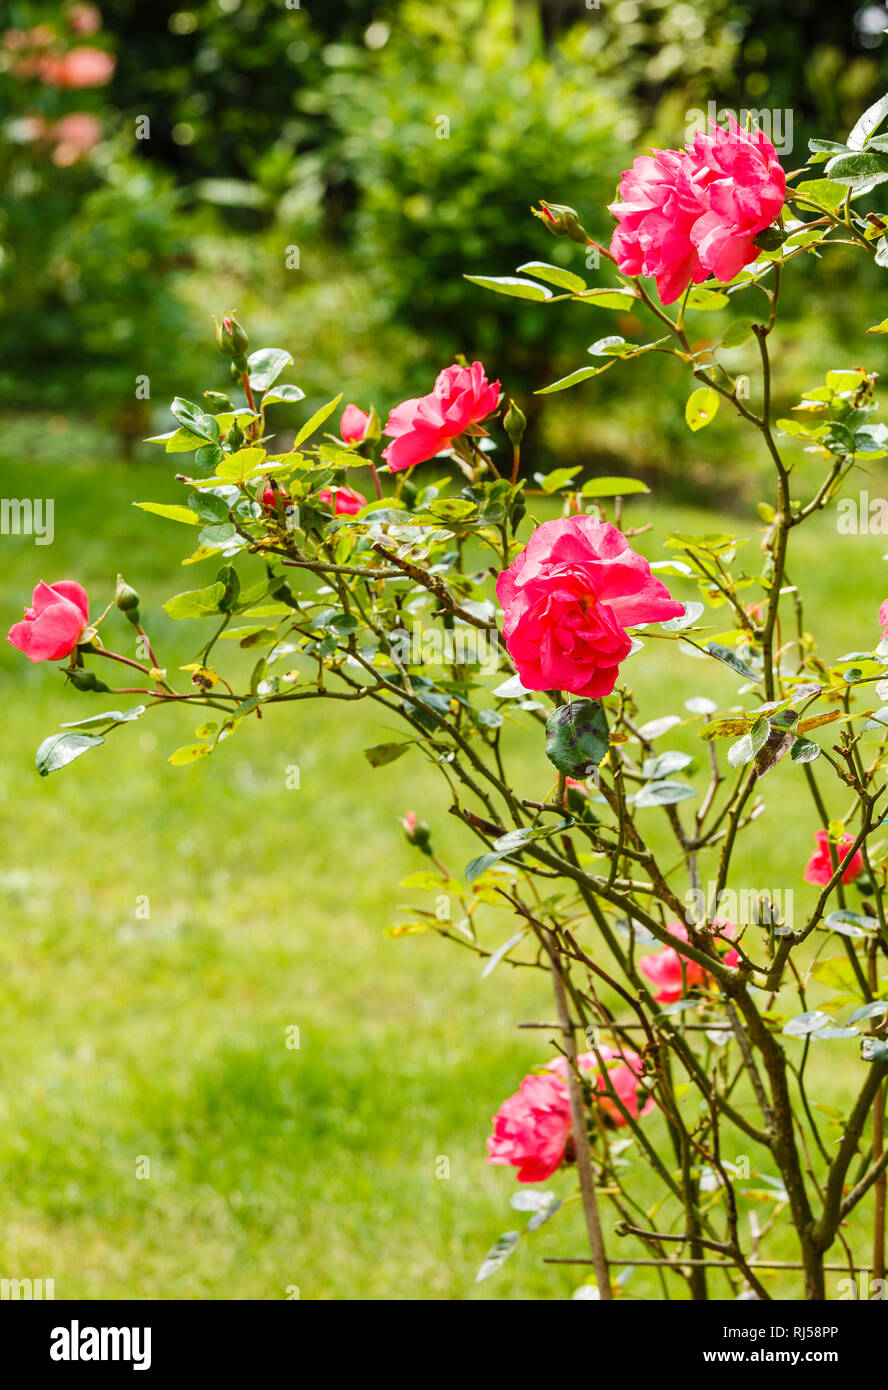 Garten im Sommer, Rosen Banque D'Images